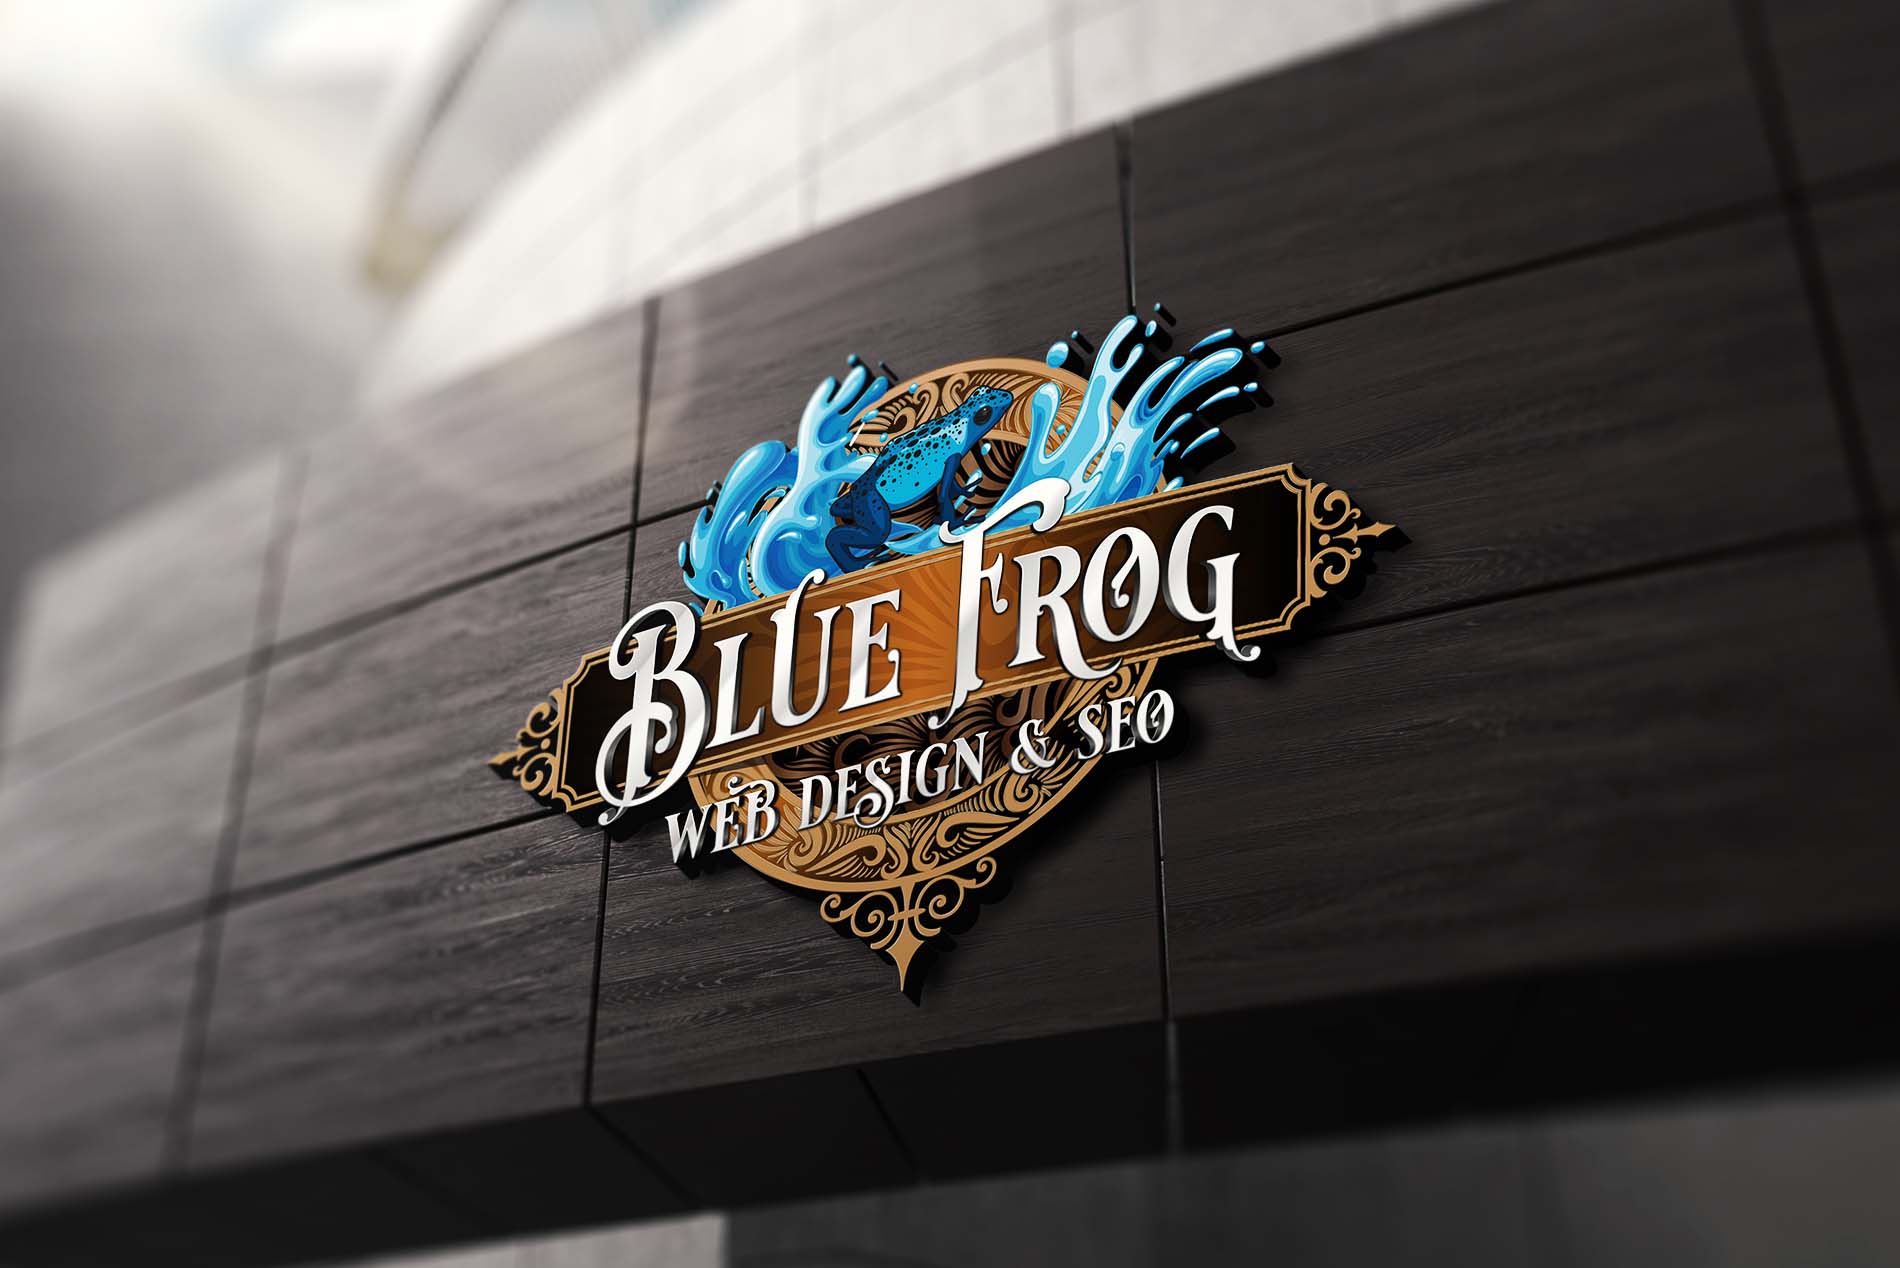 EXPERT WEBSITE DESIGN COMPANY IN FLORIN, CALIFORNIA. Blue Frog Web Design & SEO